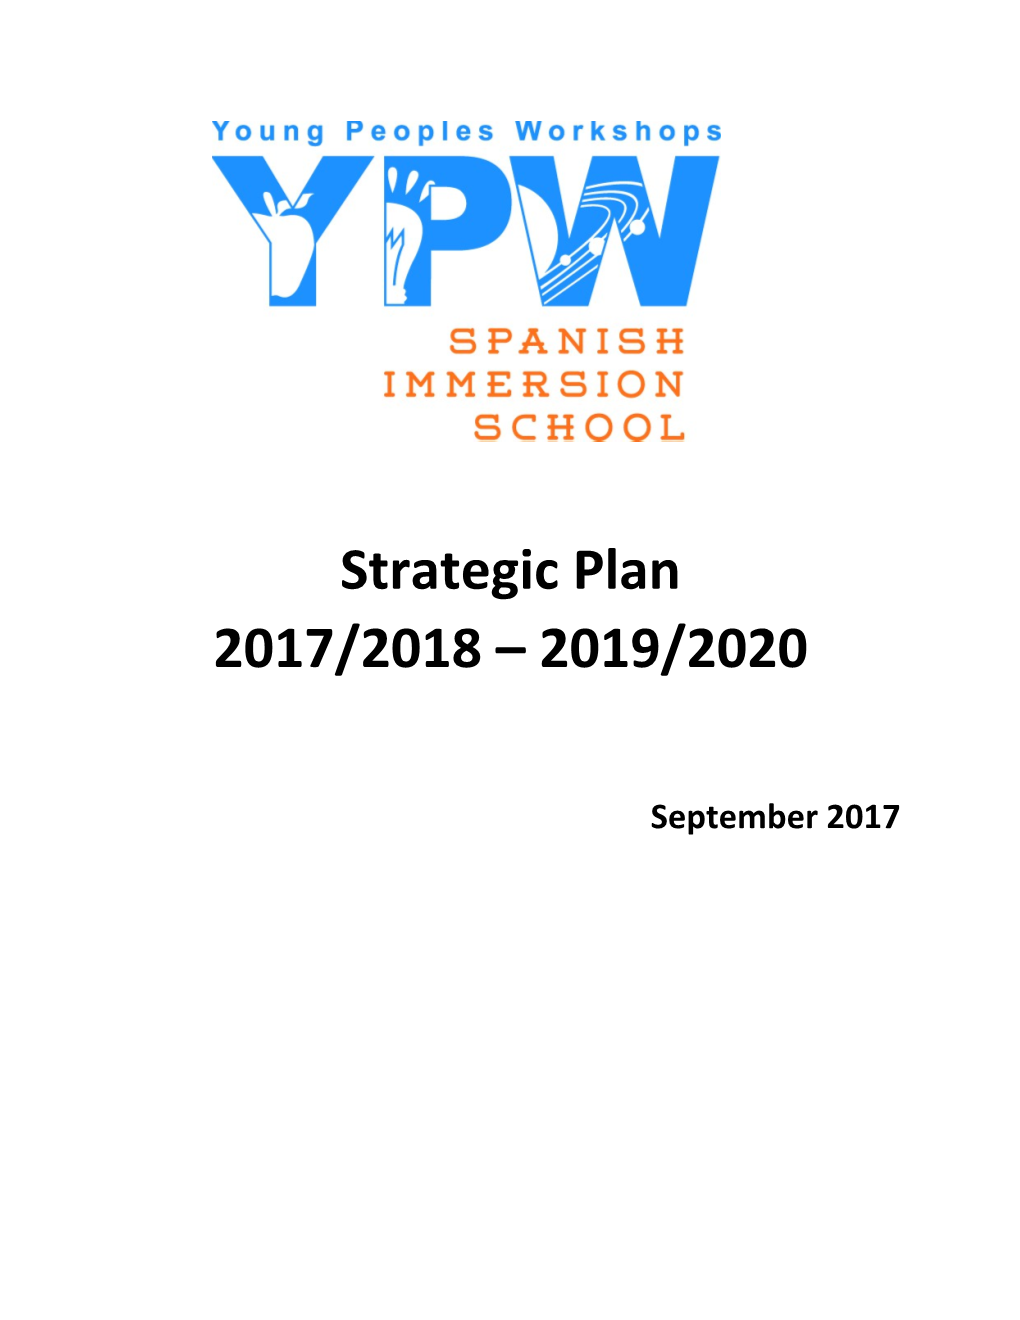 Strategic Plan 2017/2018 2019/2020